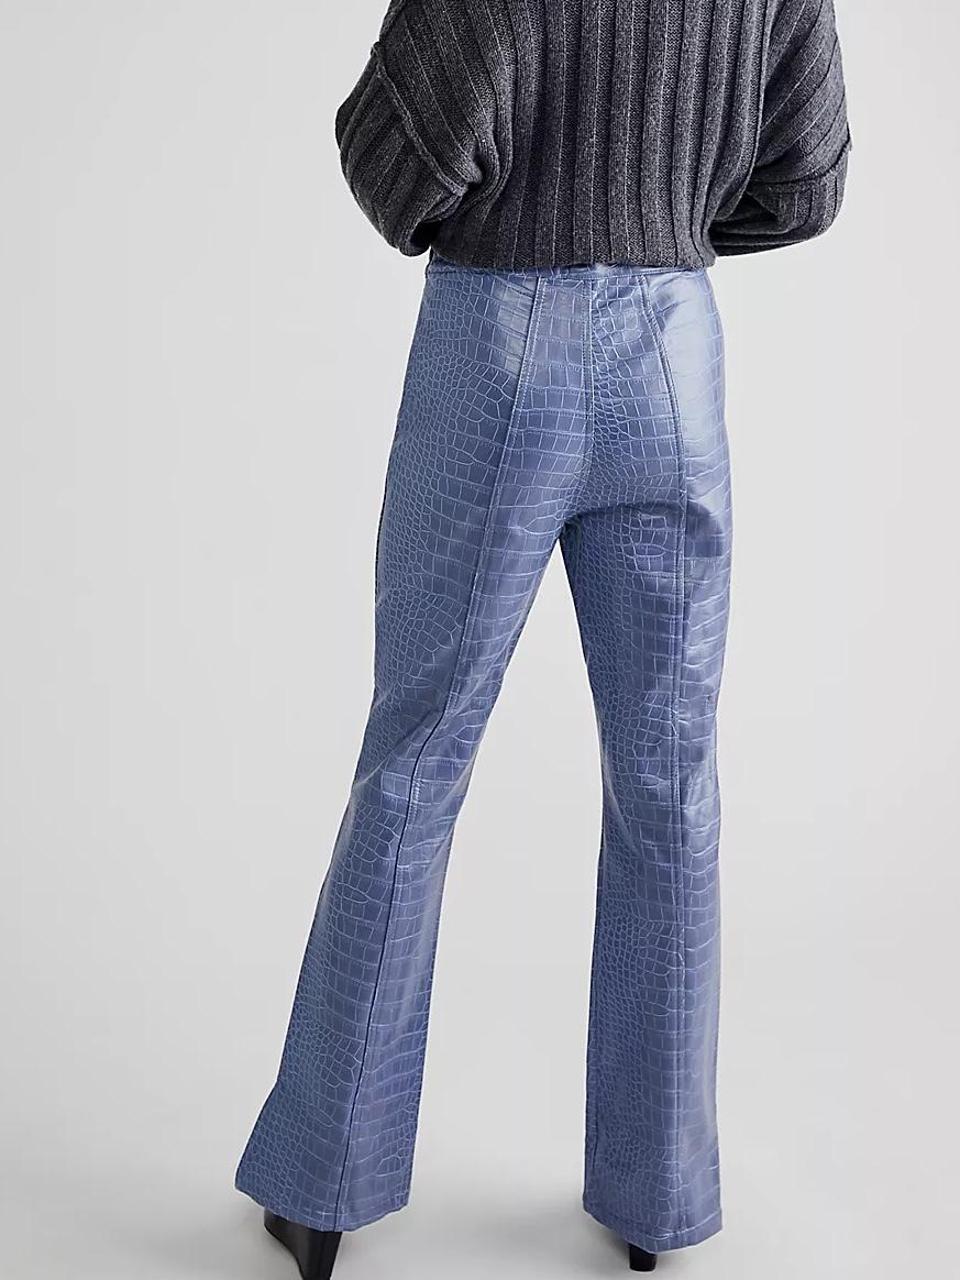 Hosbjerg Women's Blue and Purple Trousers (4)